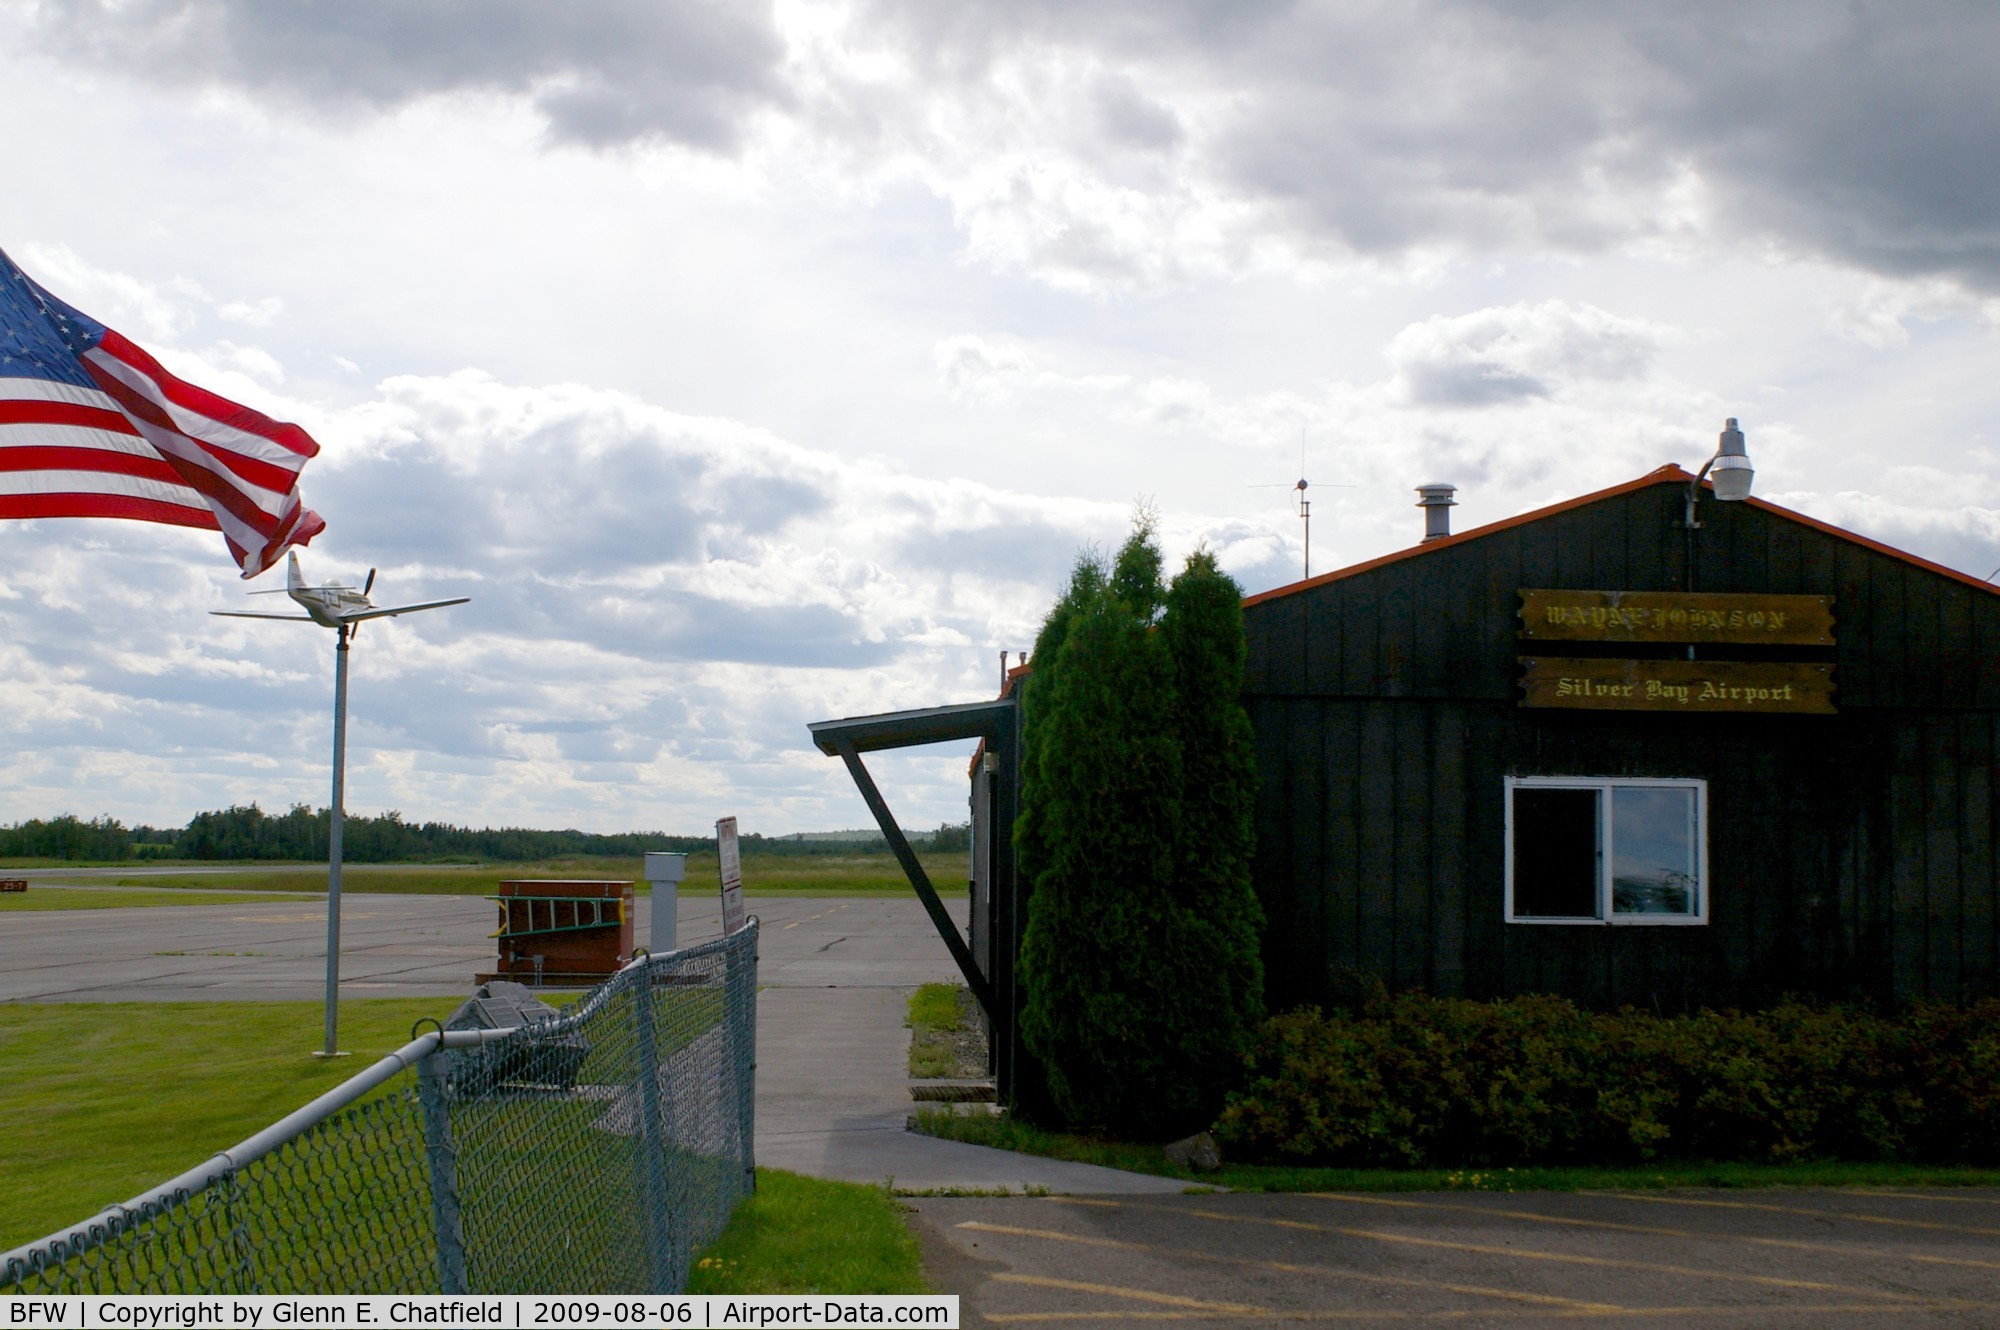 Silver Bay Municipal Airport (BFW) - Terminal